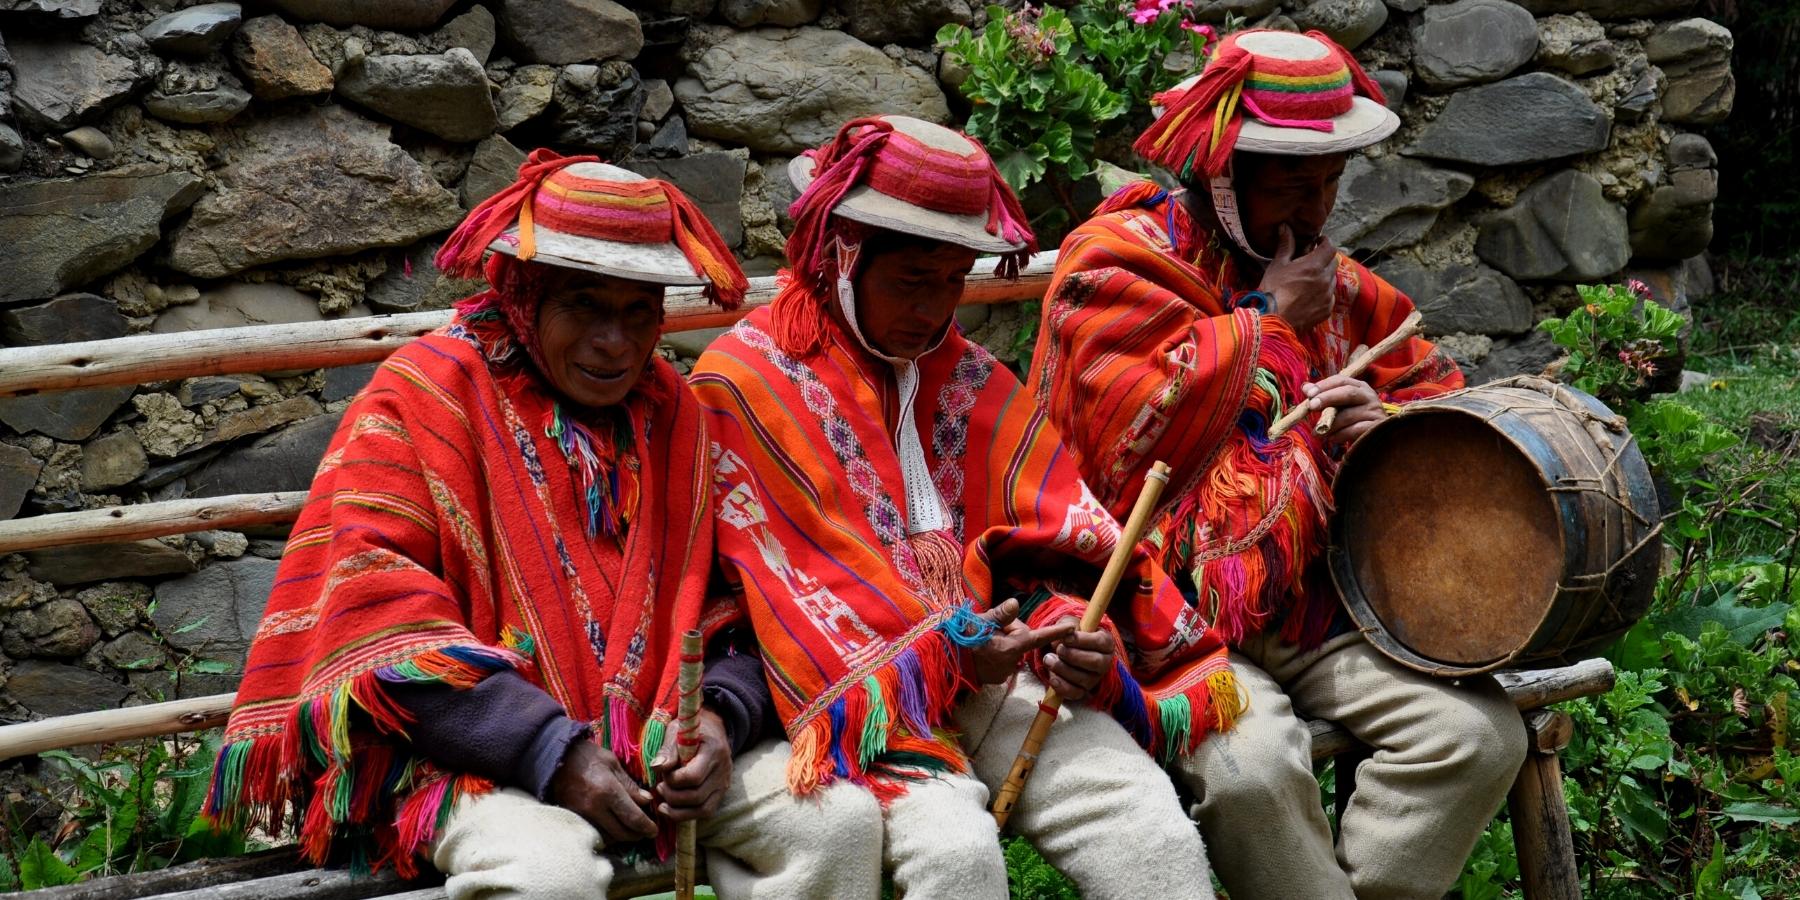 Lares Trek to Machu Picchu 3 Days